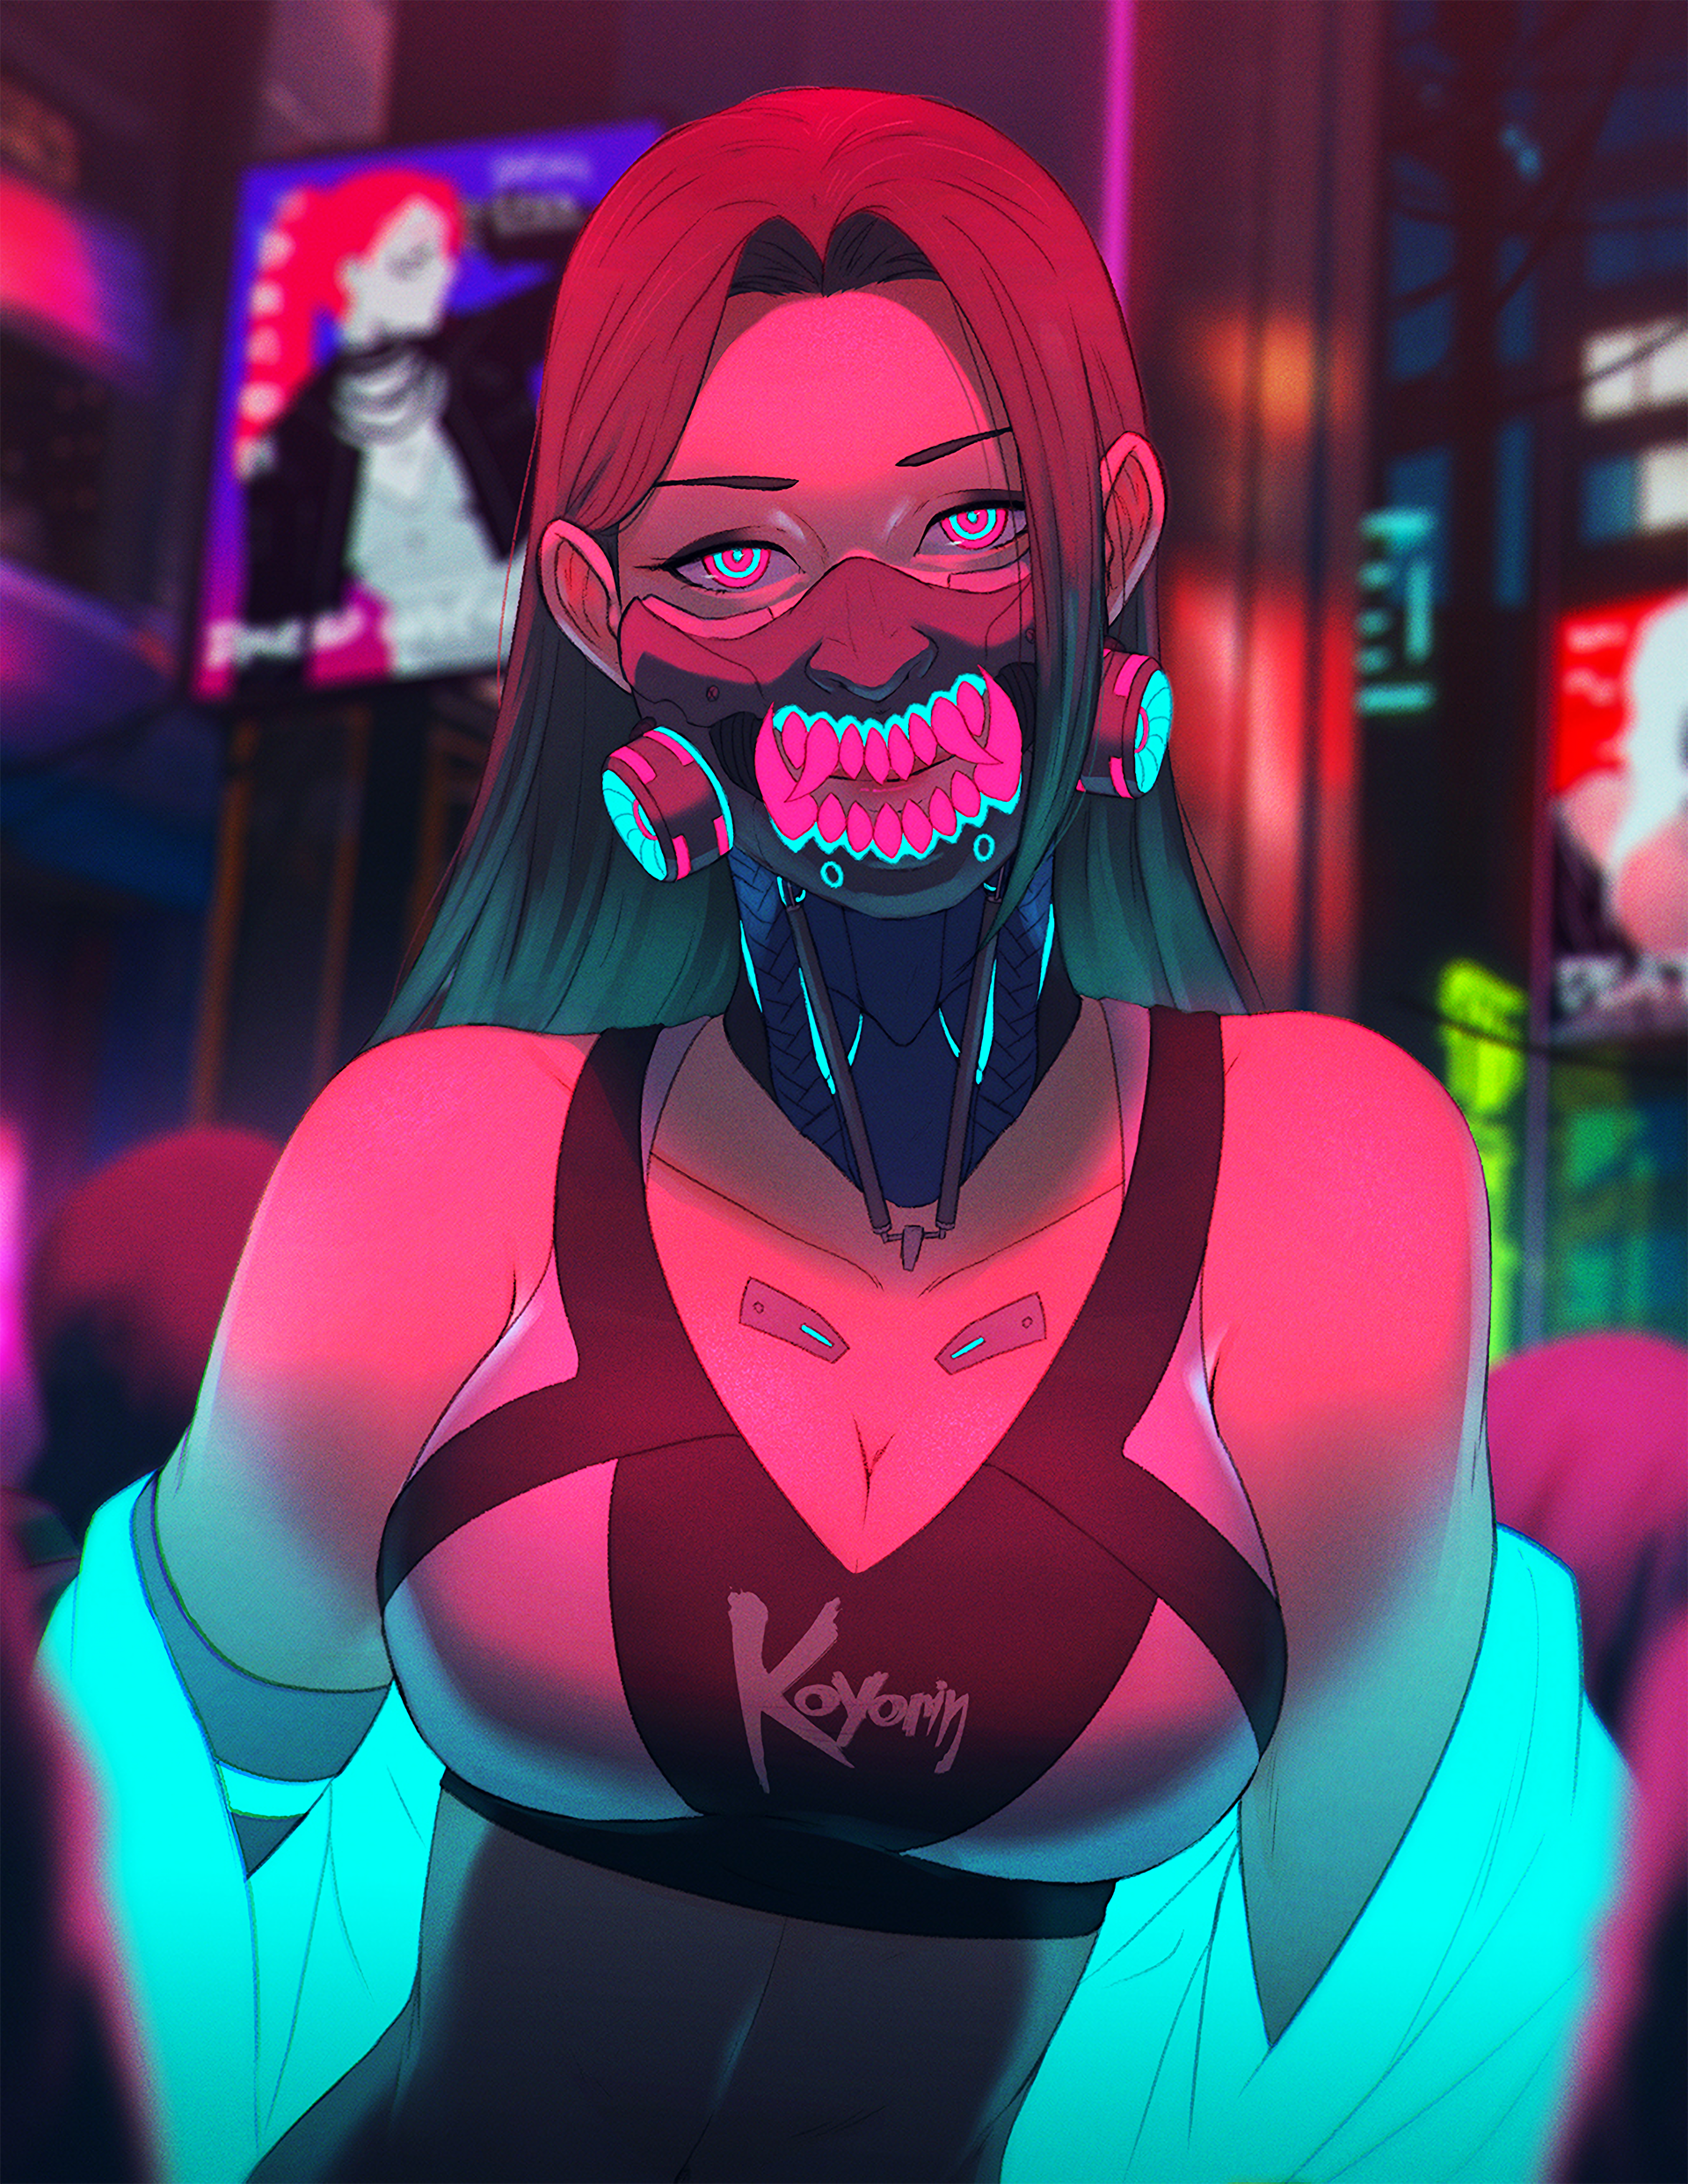 Anime 1920x2484 Koyorin cyberpunk Samurai (Cyberpunk 2077) neon colorful futuristic anime girls gas masks mask portrait display